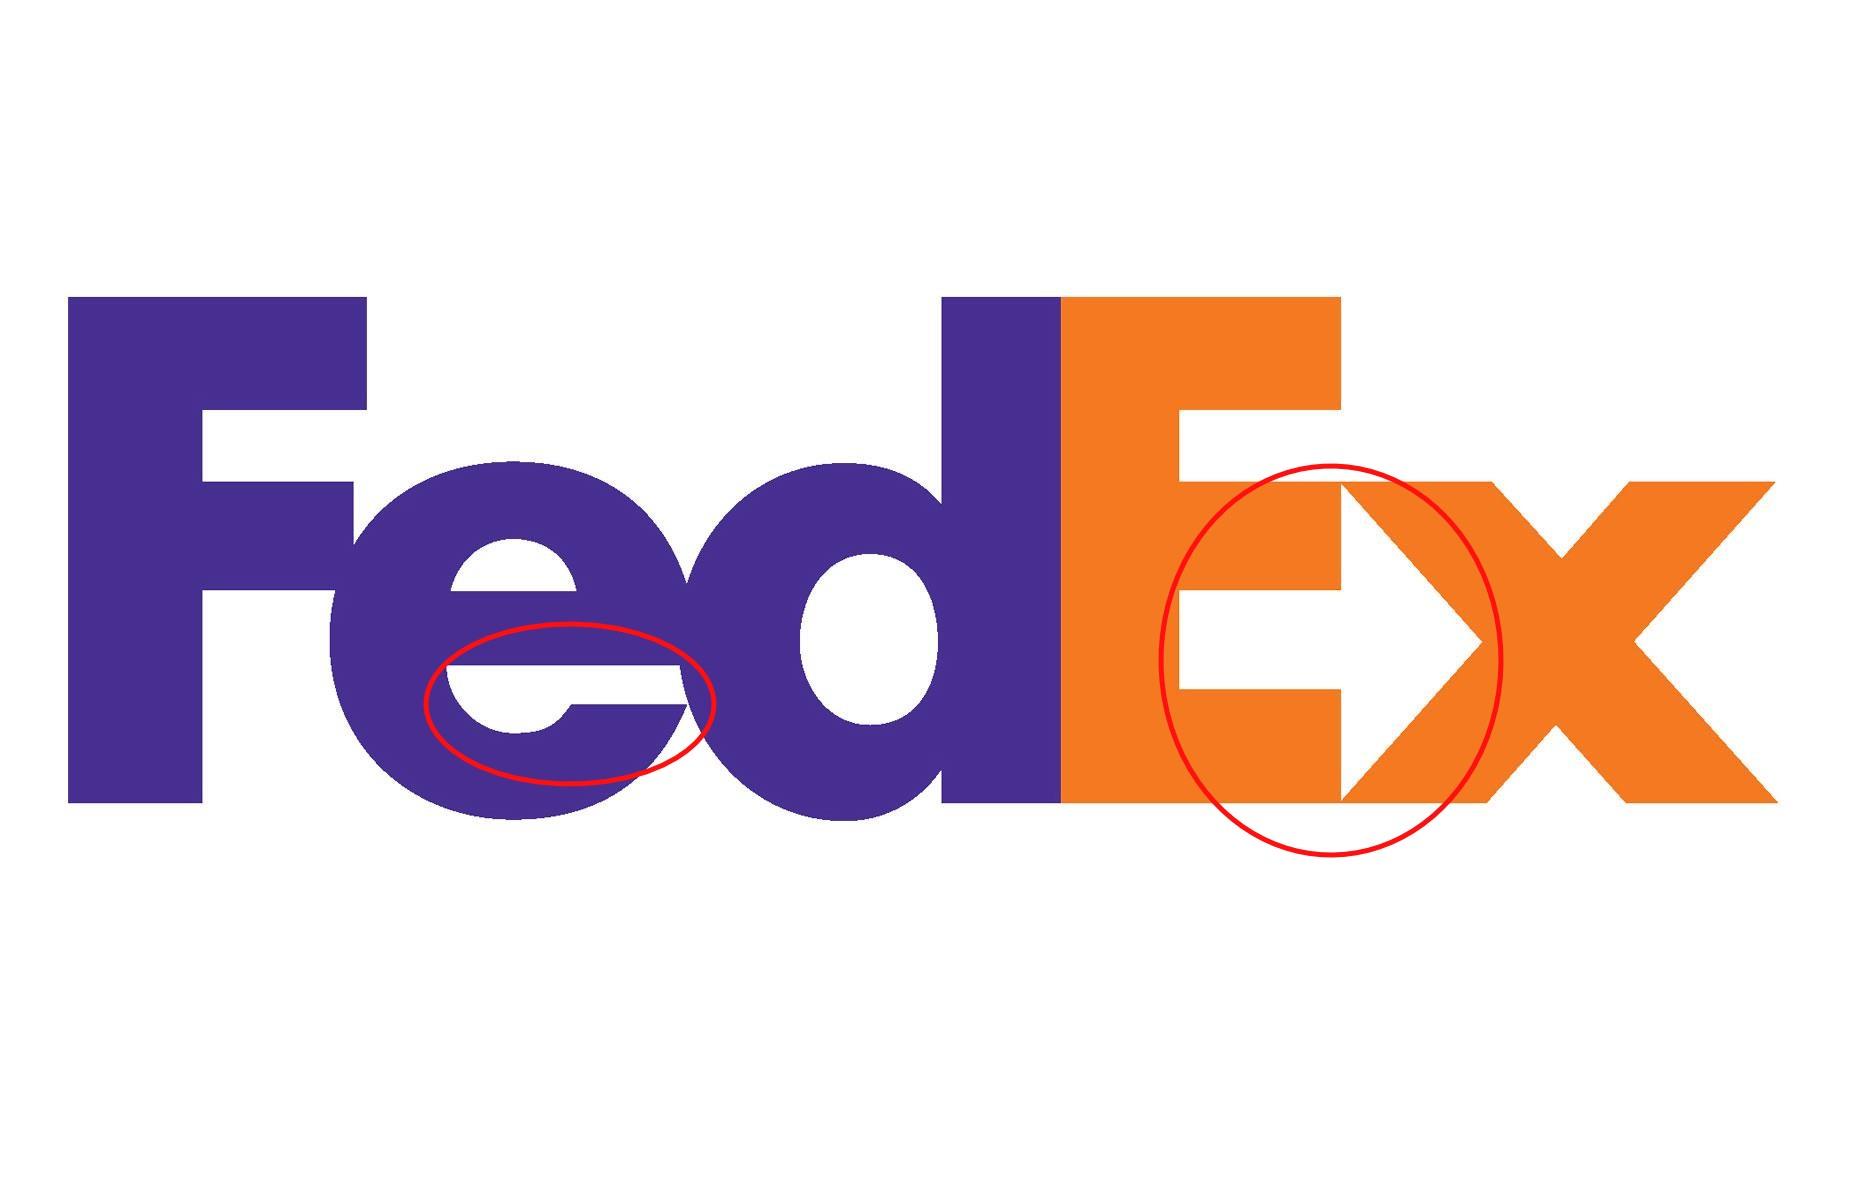 Best: FedEx – after